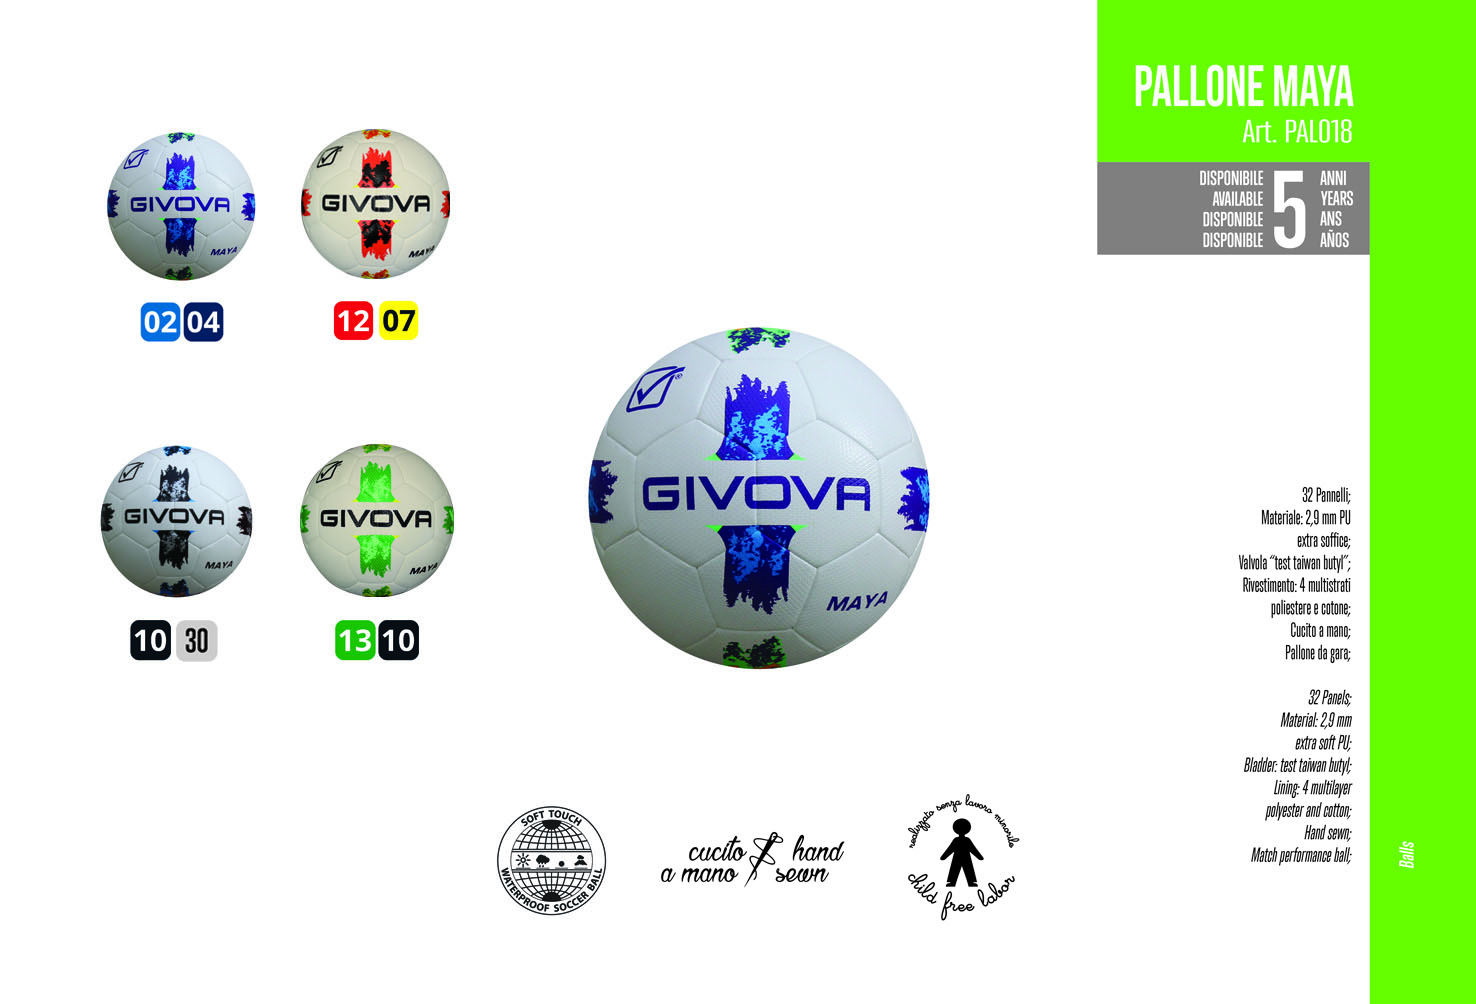 GIVOVA MATCH GARA SPORT CALCIO CALCETTO FOOTBALL BALLS PALLONI HYBRID PALLONE MAYA